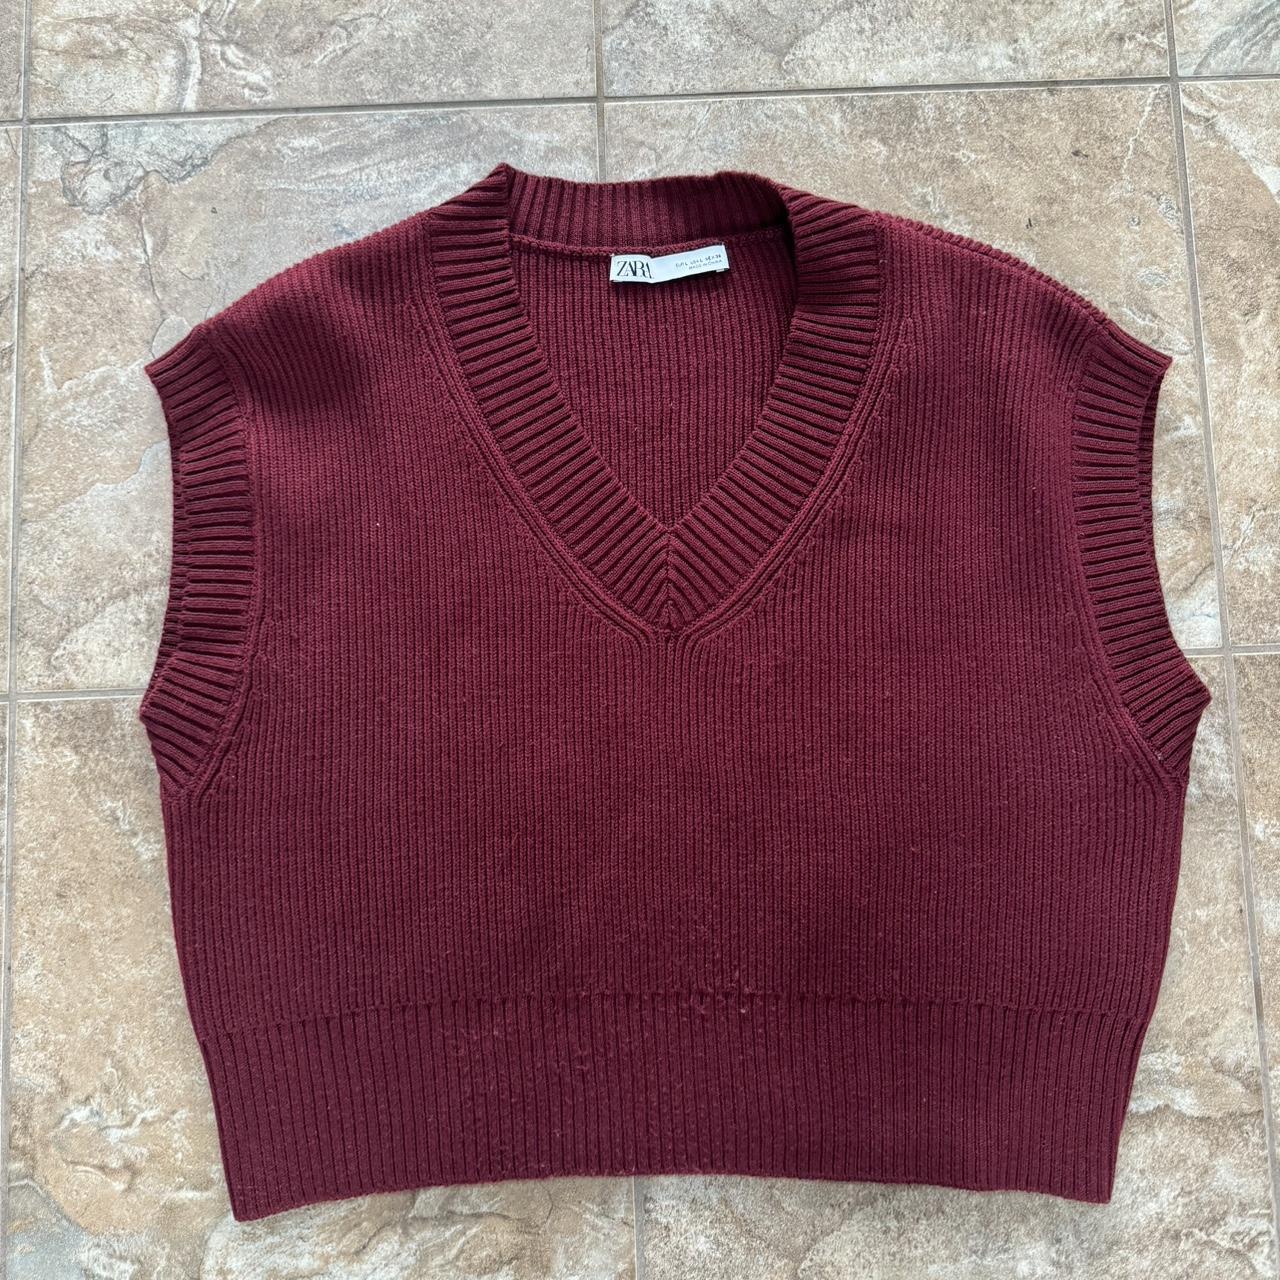 Zara sweater vest - Depop